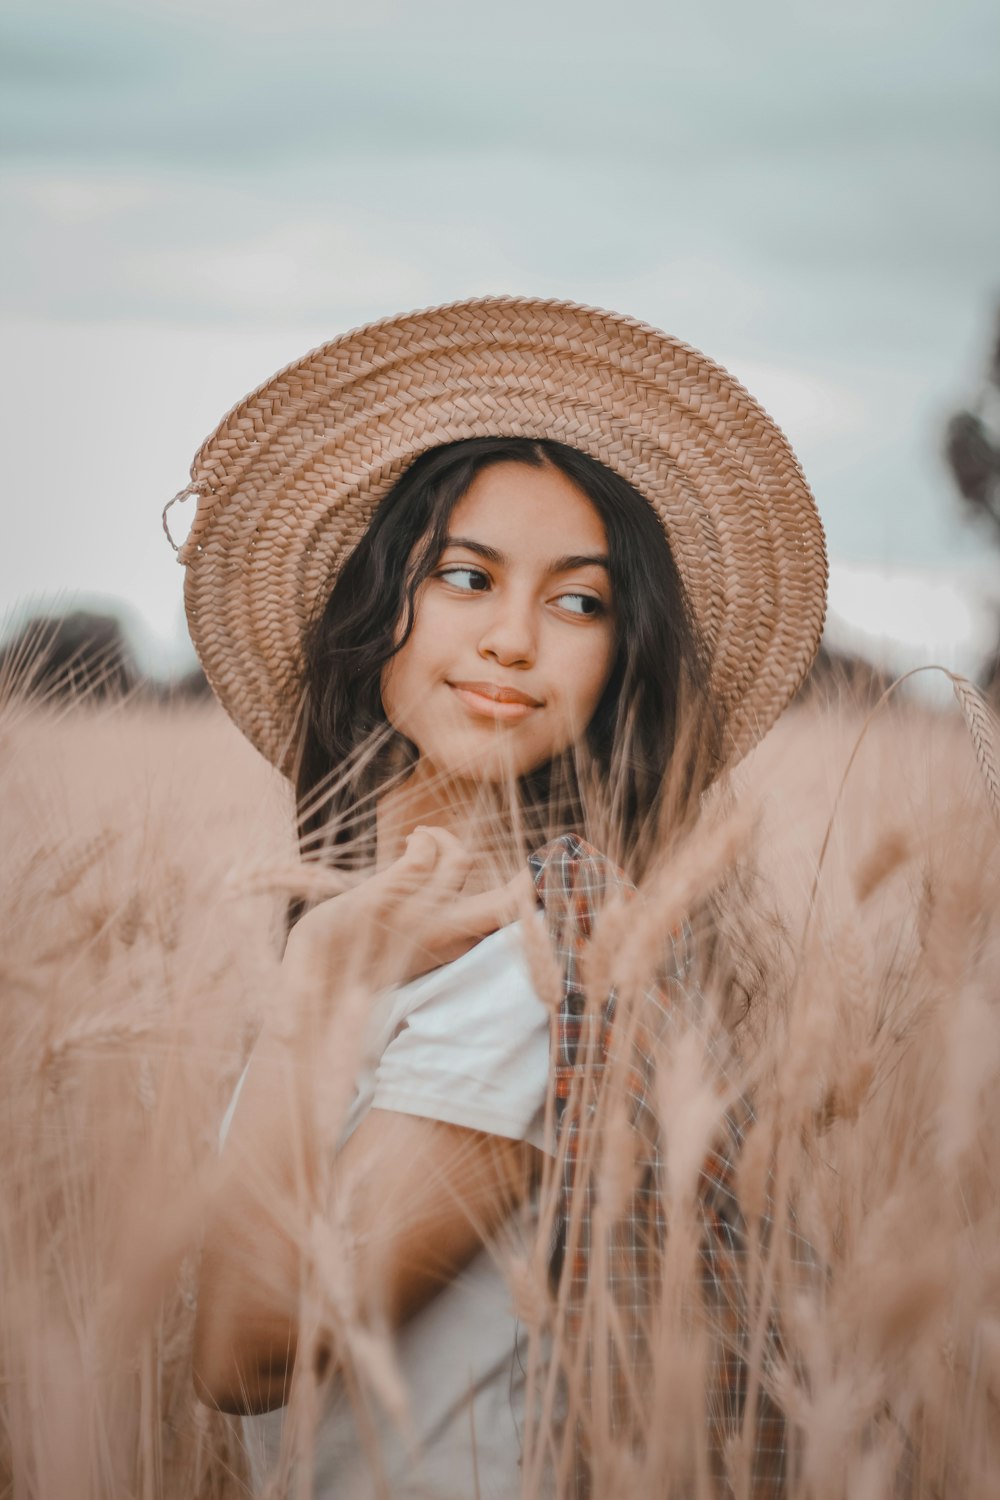 a woman wearing a straw hat standing in a field